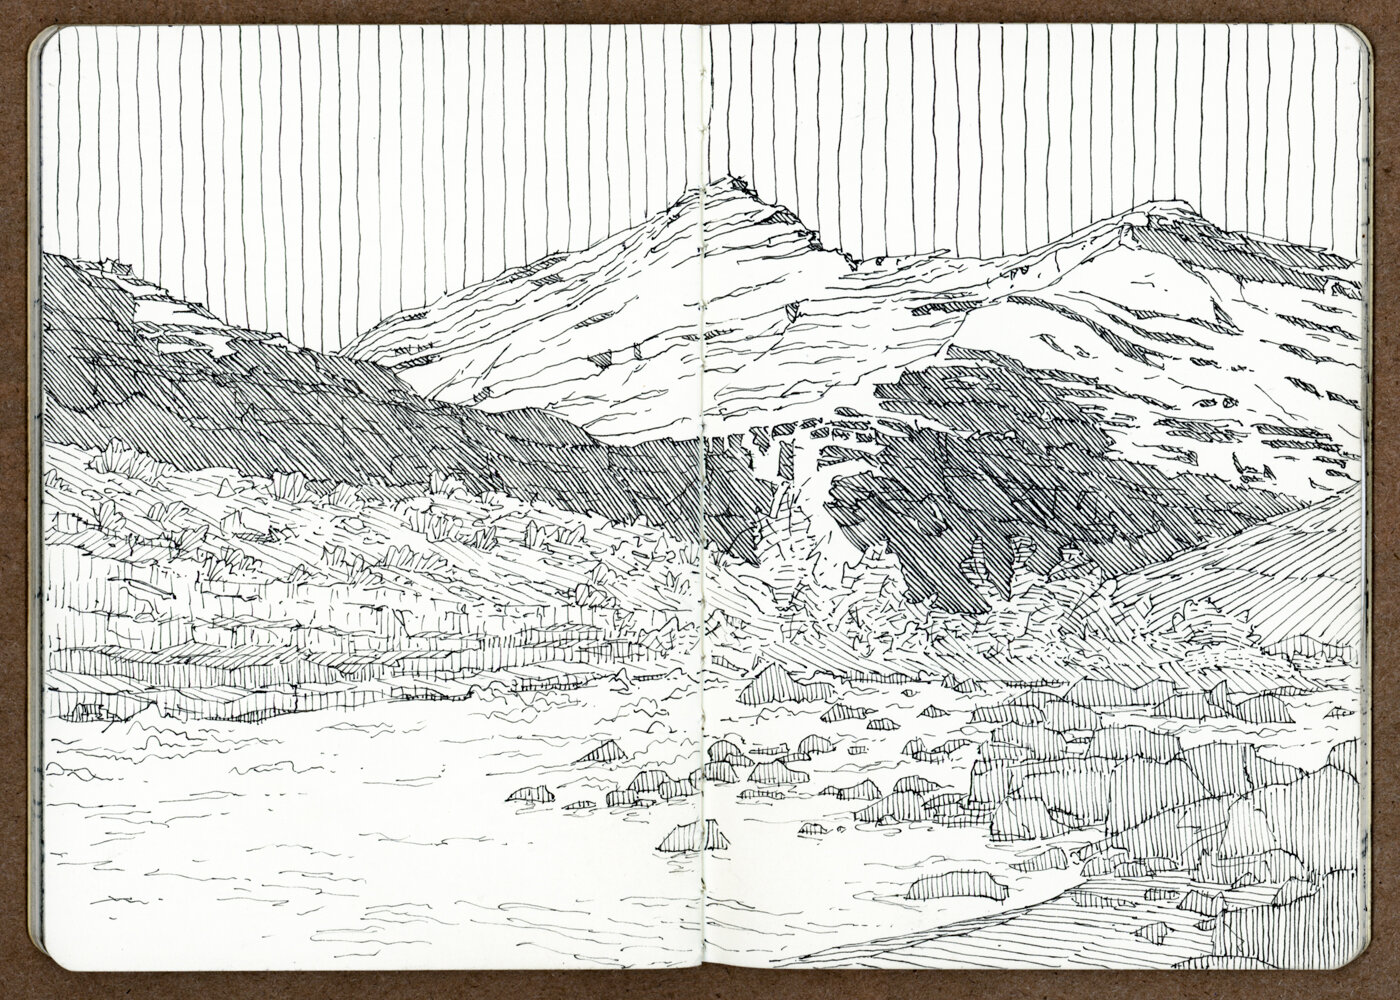 08-17 Soda Basin and Ruplee Ridge from Ledge Camp Lower San Juan.jpg